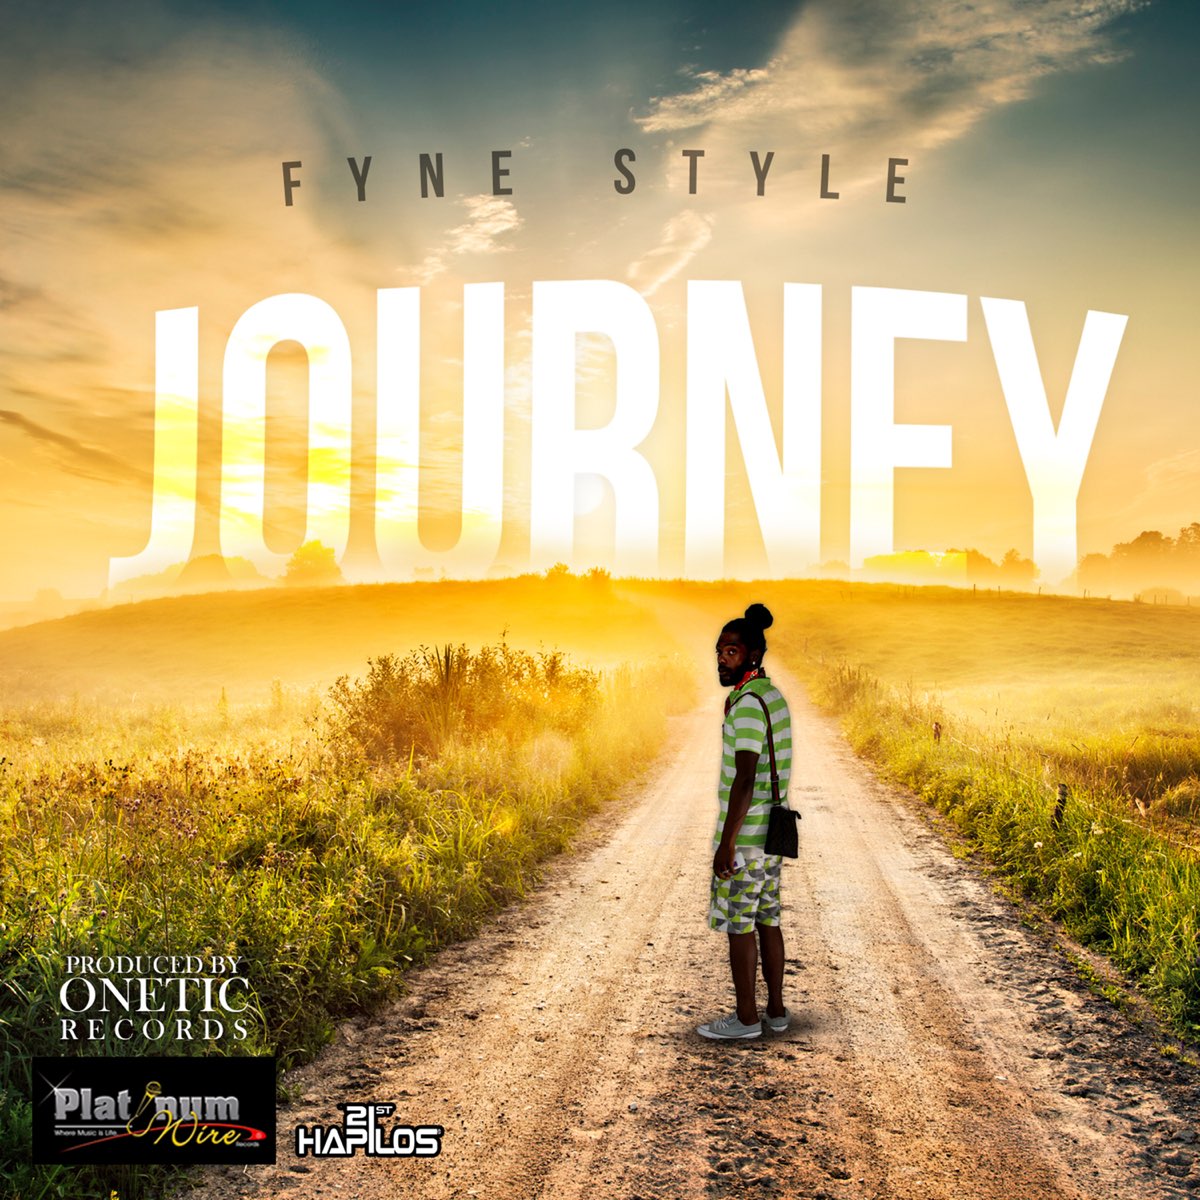 Альбом Джорни. Lifting Journey обложка. The Home Journey 2018 Music. Journey mp3